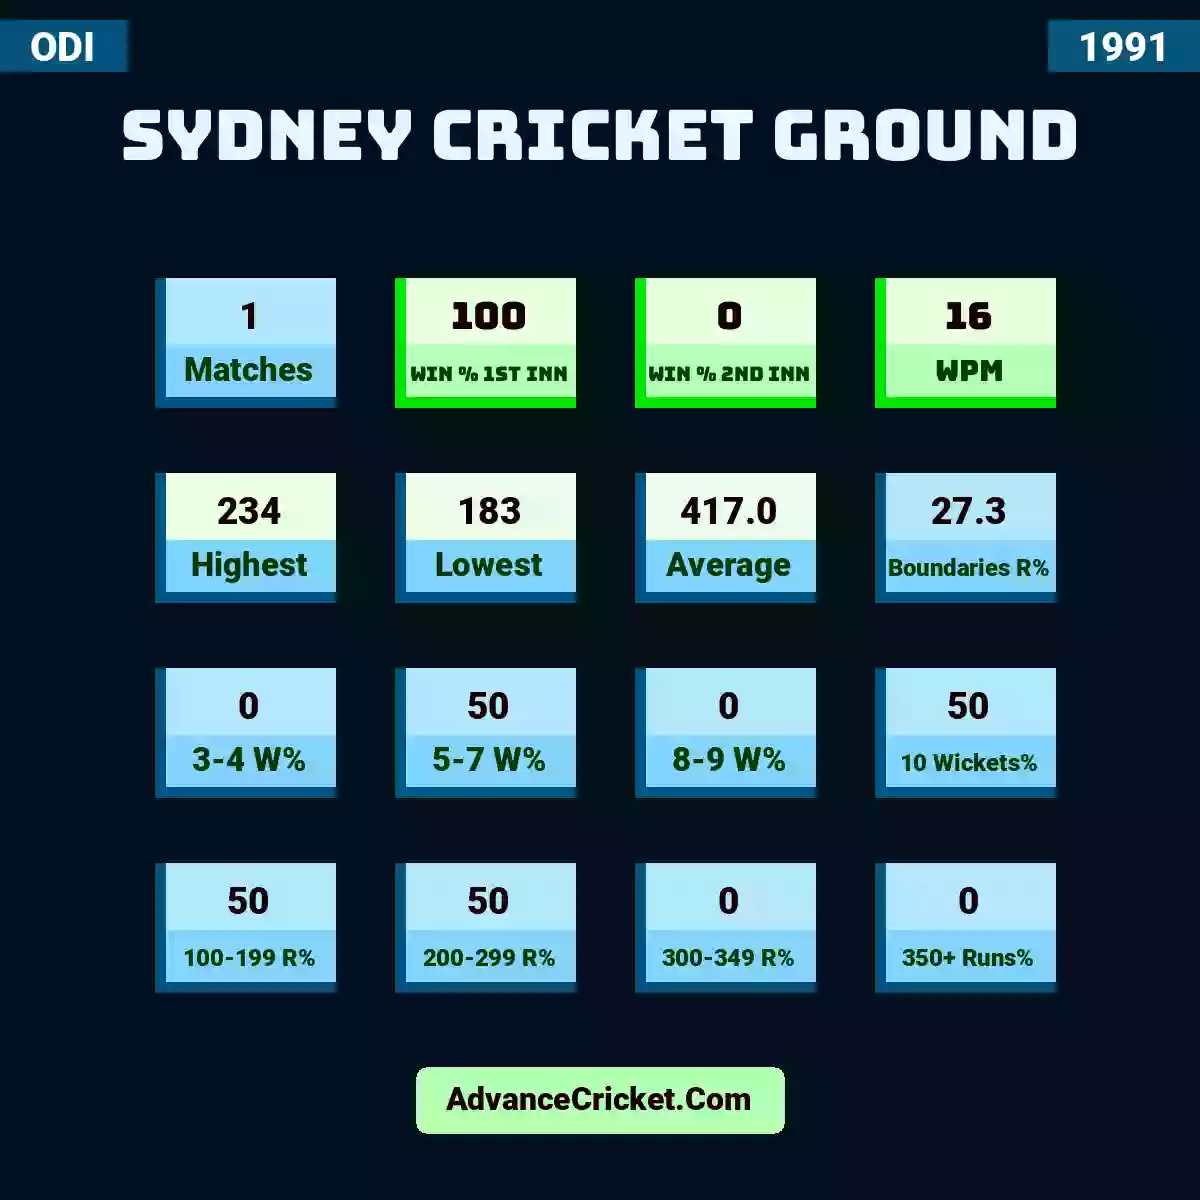 Image showing Sydney Cricket Ground with Matches: 1, Win % 1st Inn: 100, Win % 2nd Inn: 0, WPM: 16, Highest: 234, Lowest: 183, Average: 417.0, Boundaries R%: 27.3, 3-4 W%: 0, 5-7 W%: 50, 8-9 W%: 0, 10 Wickets%: 50, 100-199 R%: 50, 200-299 R%: 50, 300-349 R%: 0, 350+ Runs%: 0.